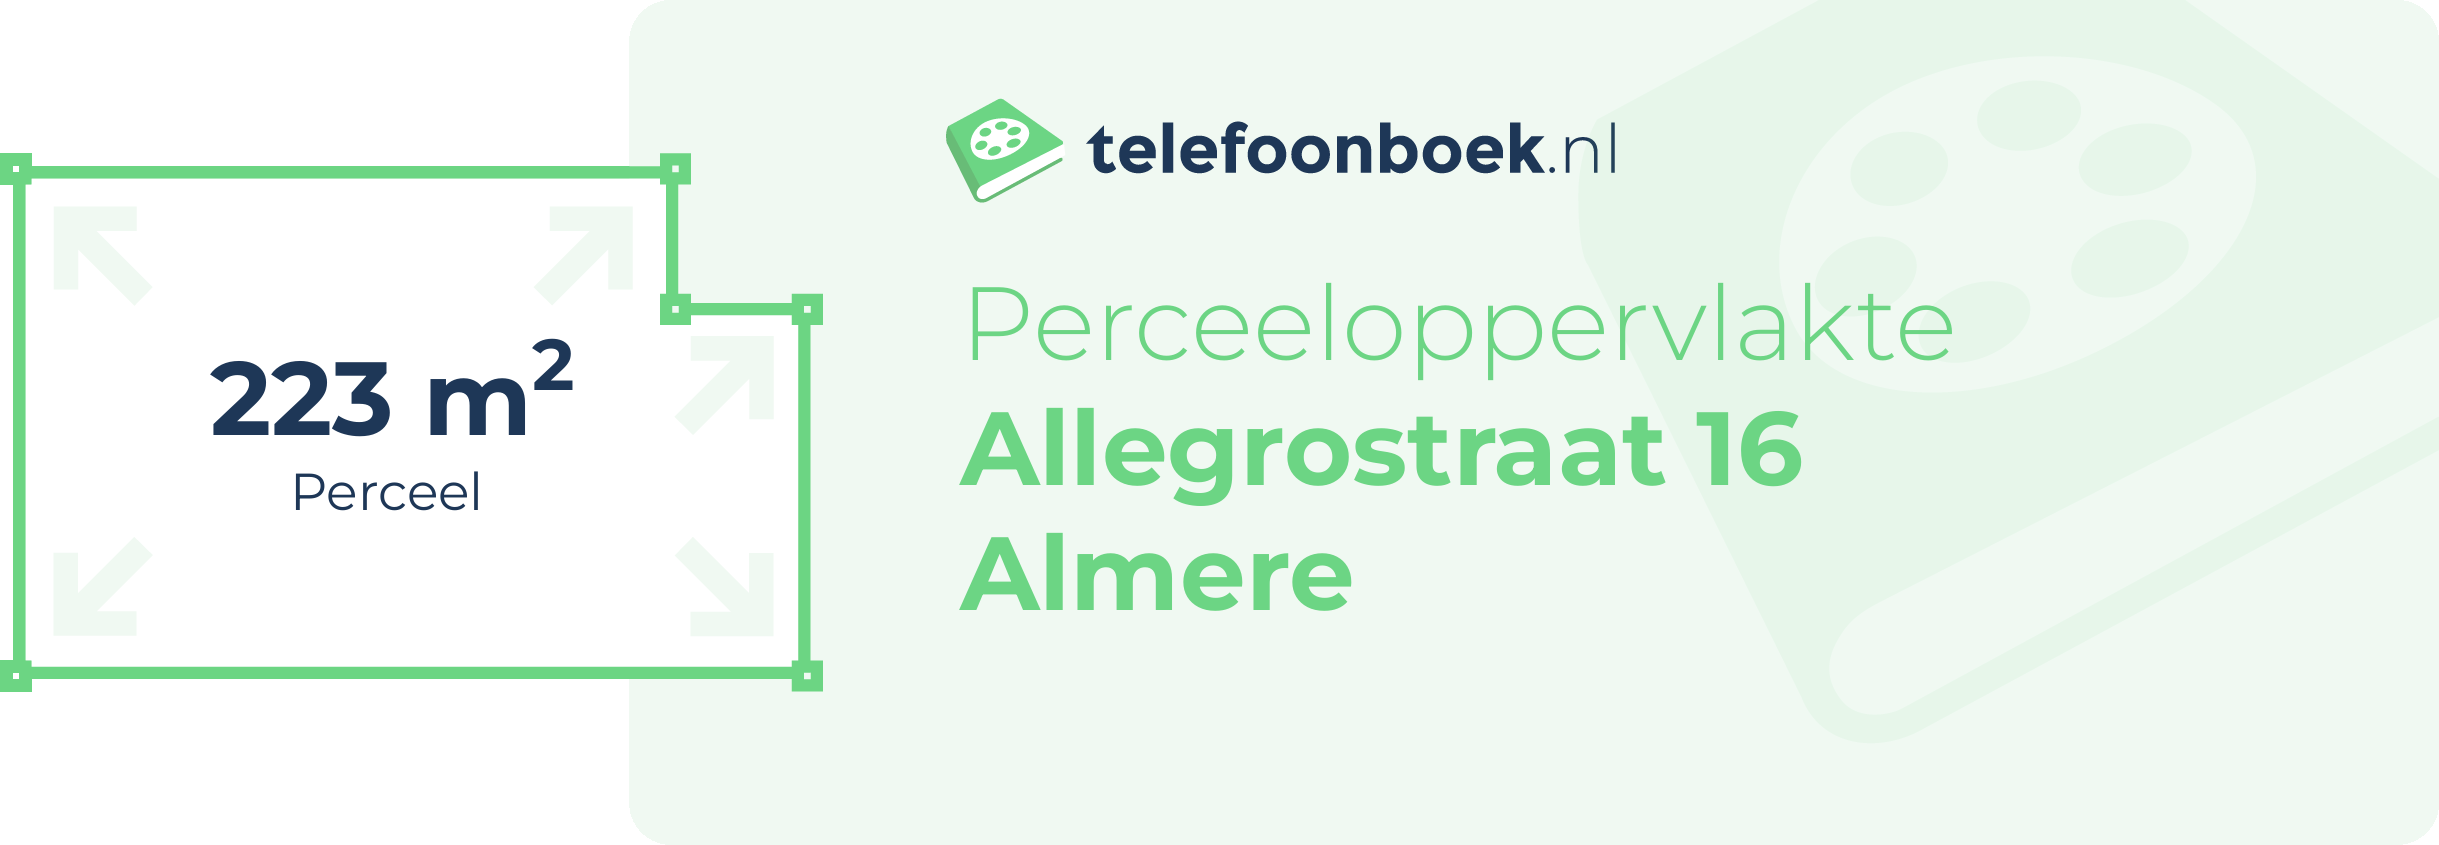 Perceeloppervlakte Allegrostraat 16 Almere